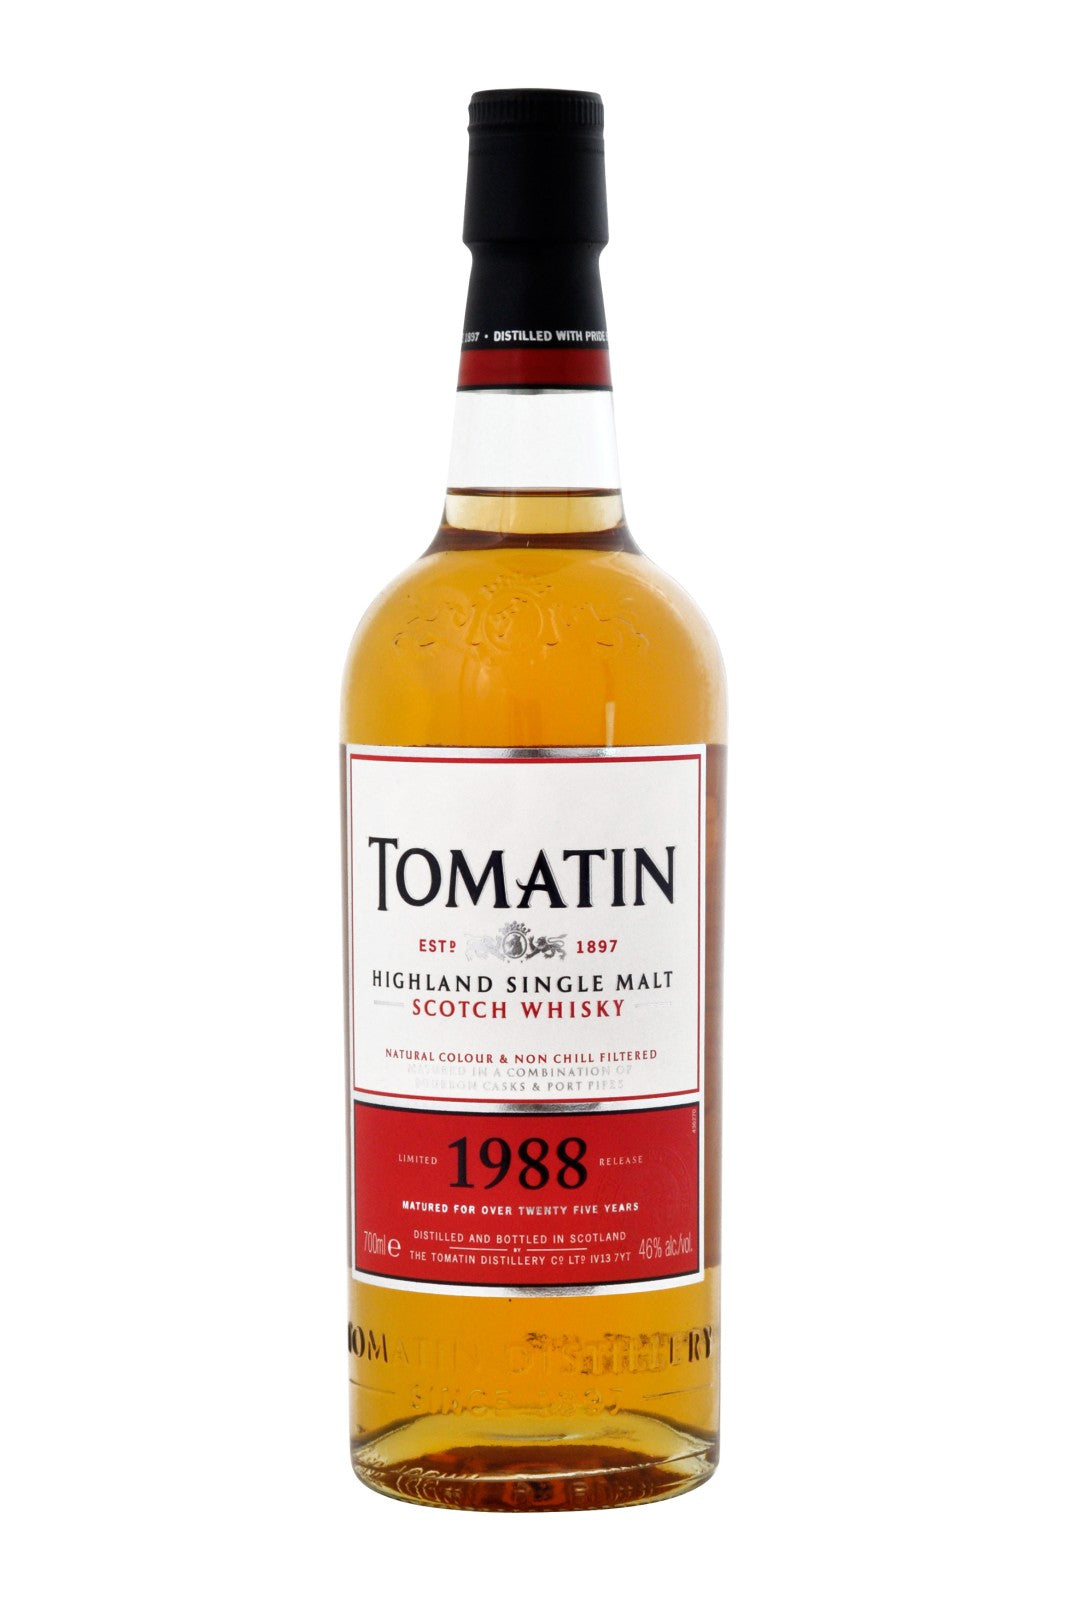 Tomatin 1988